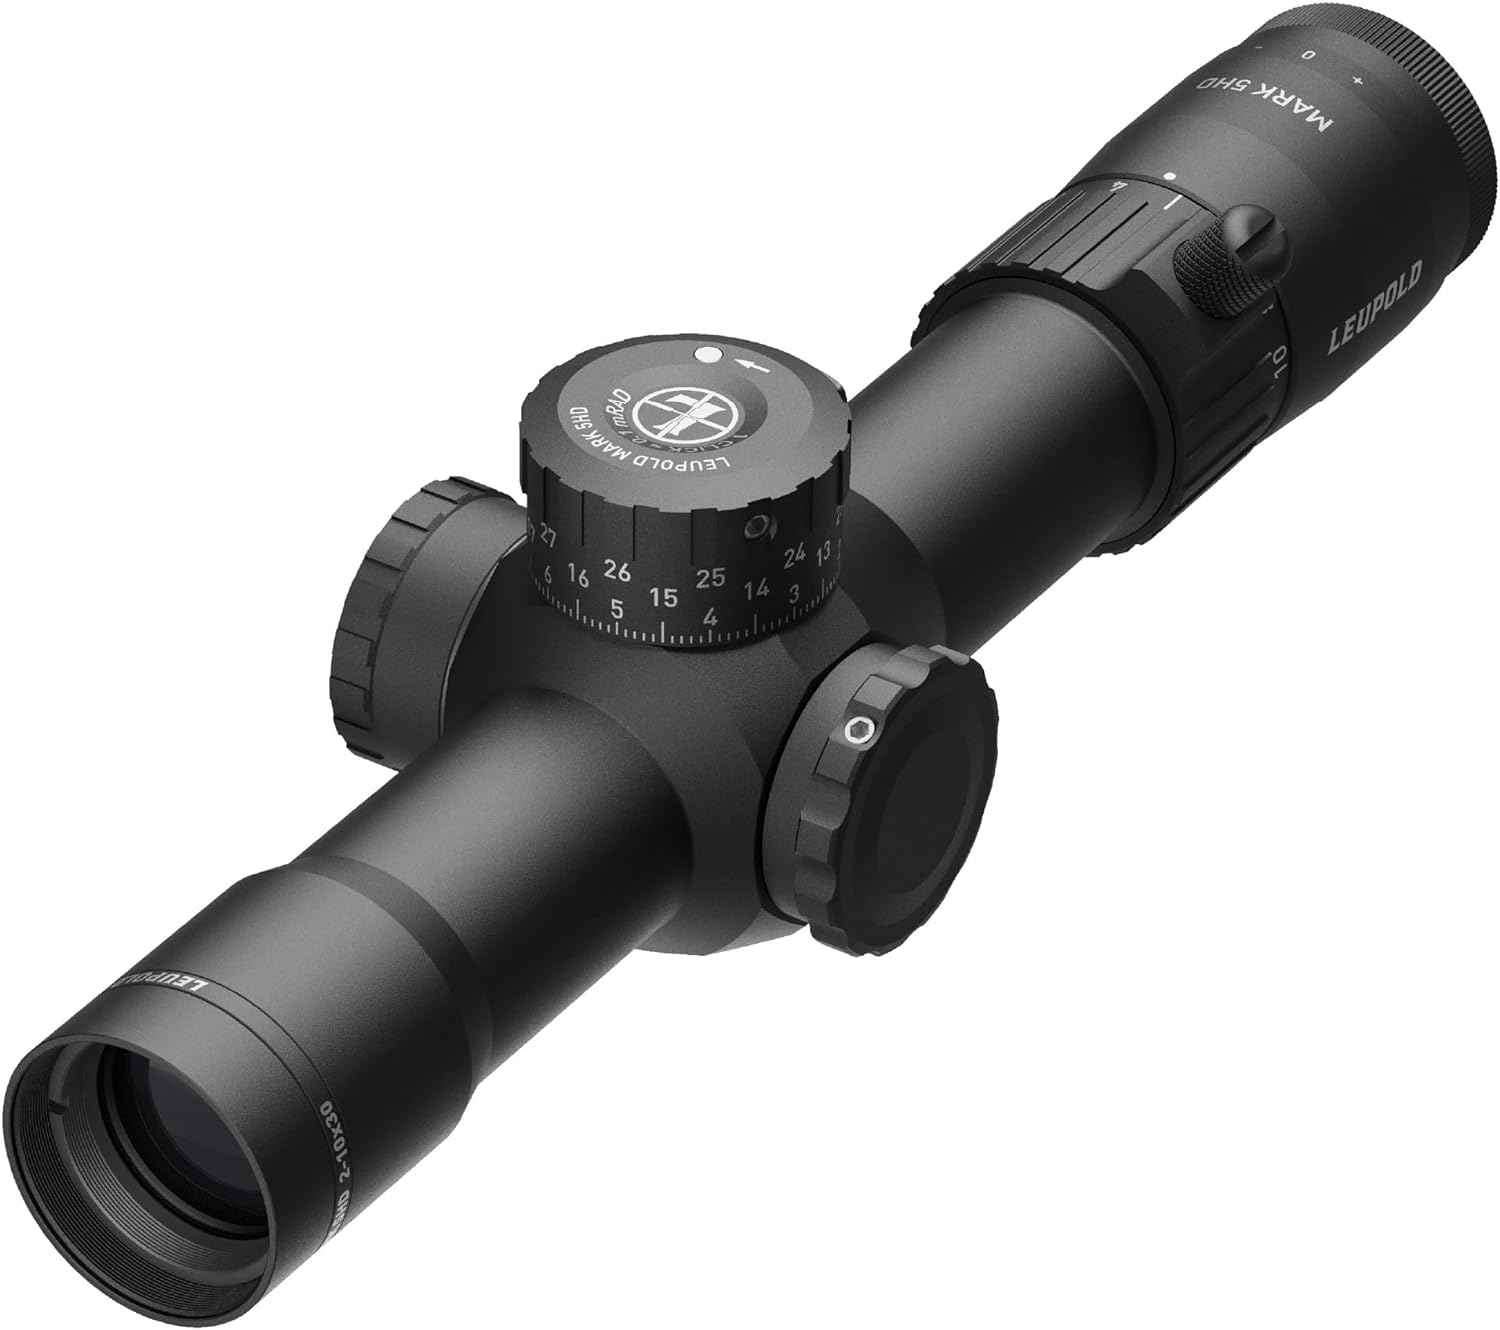 Leupold Mark 5HD 2-10x30 Riflescope Review